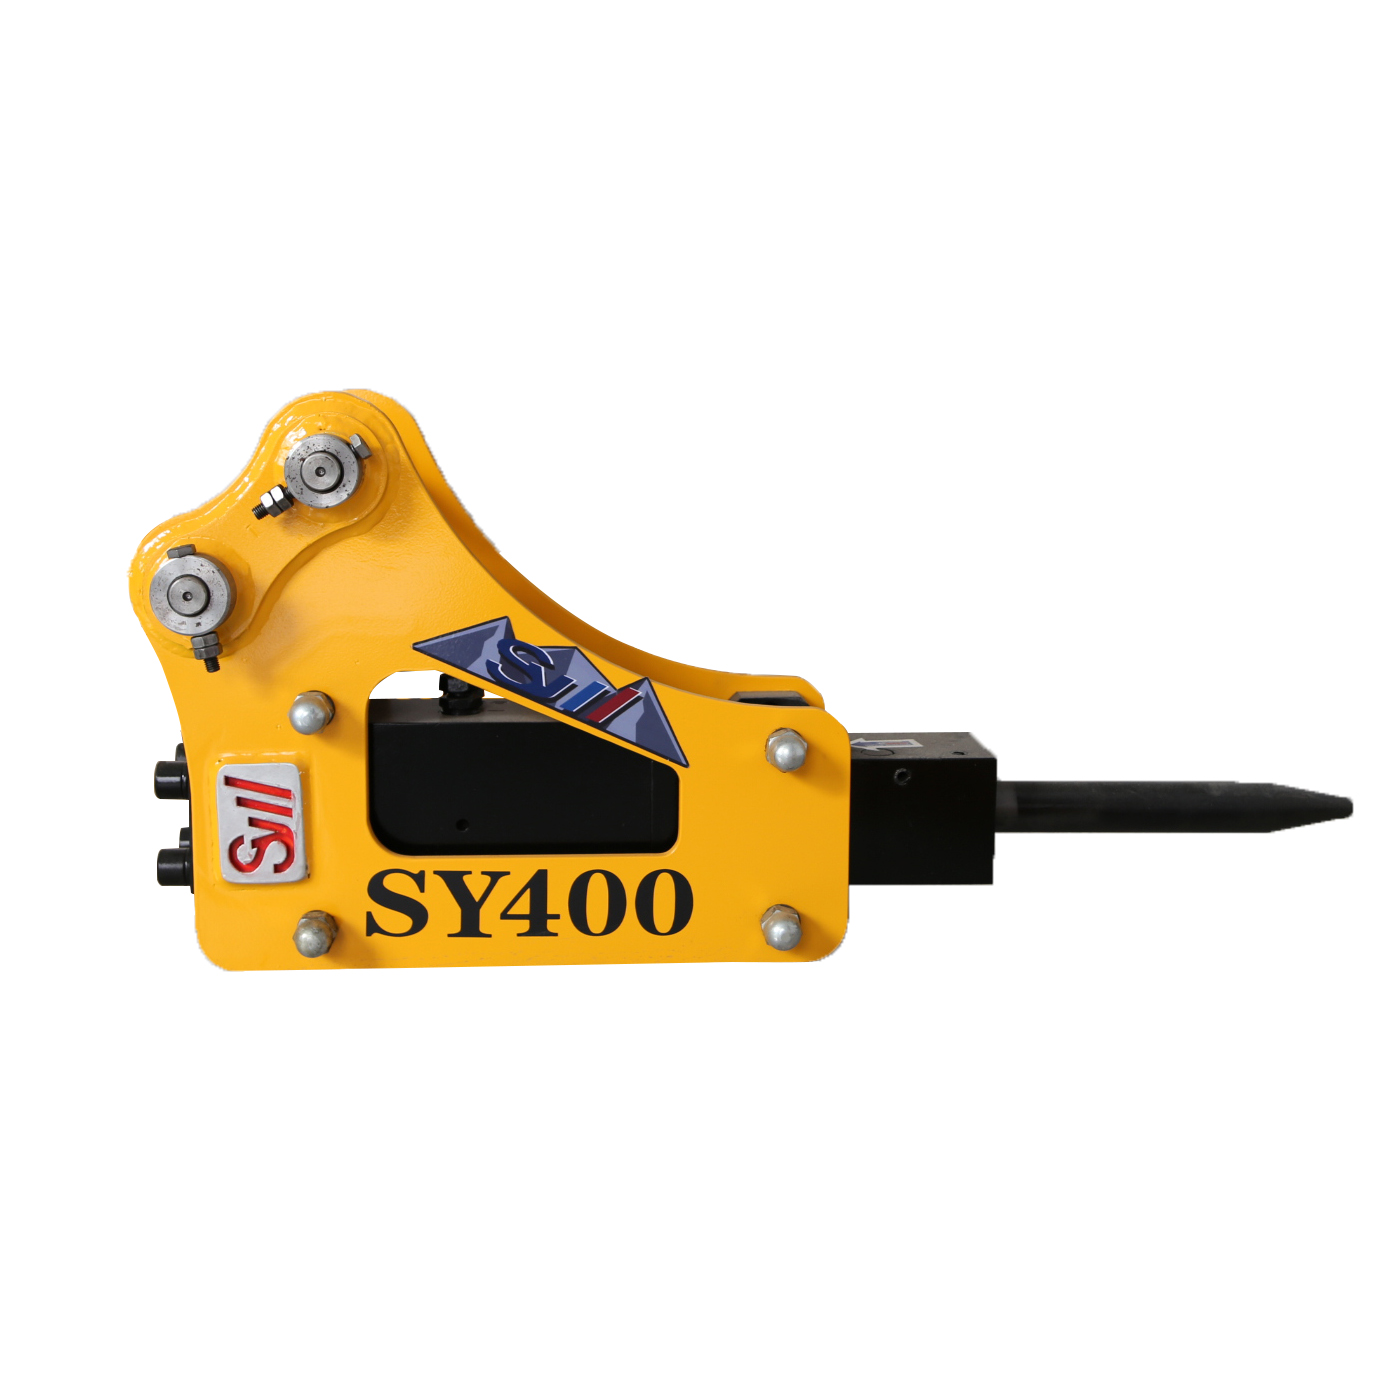 SY400 side type hydraulic breaker Featured Image